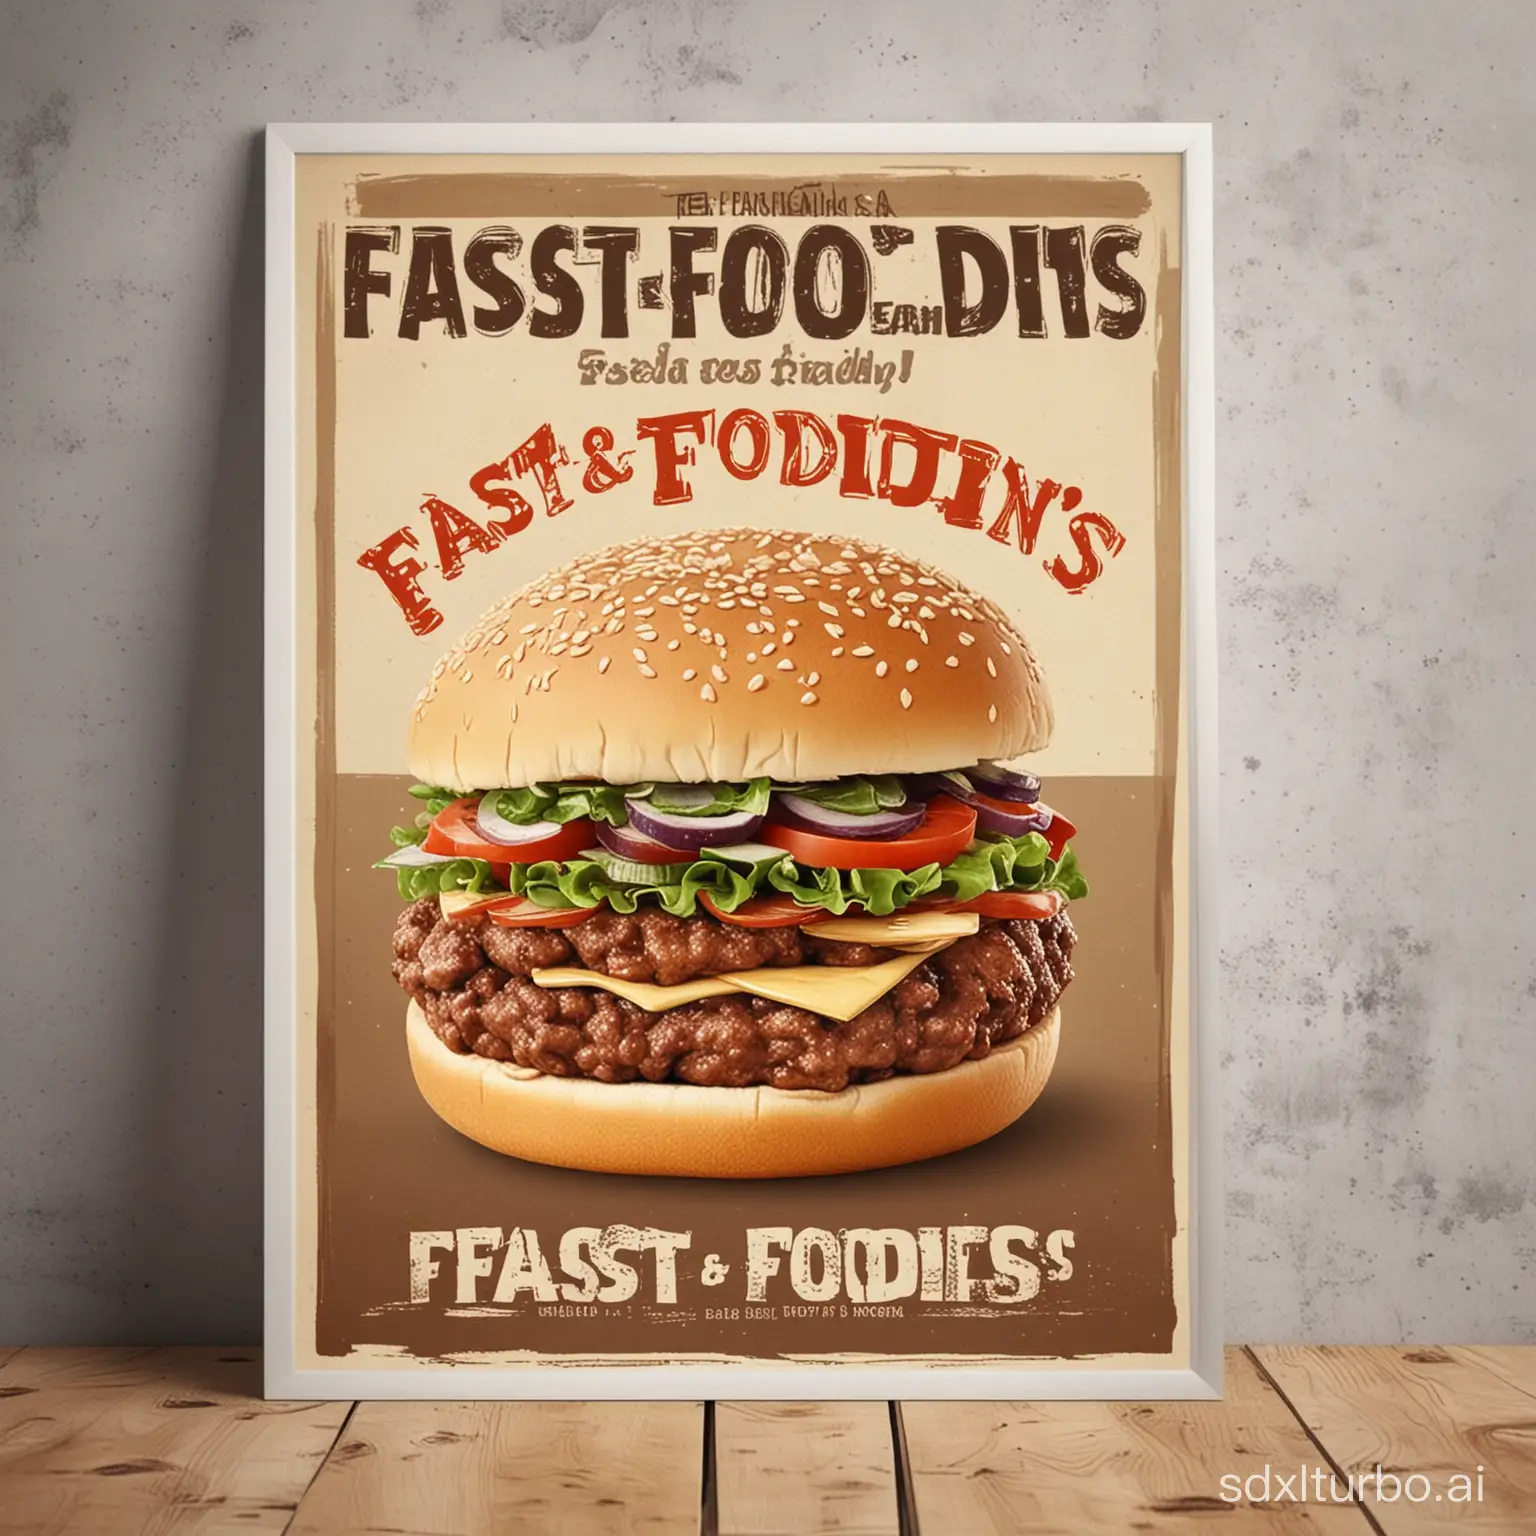 Crea un cartel que ponga FAST & FOODIUS